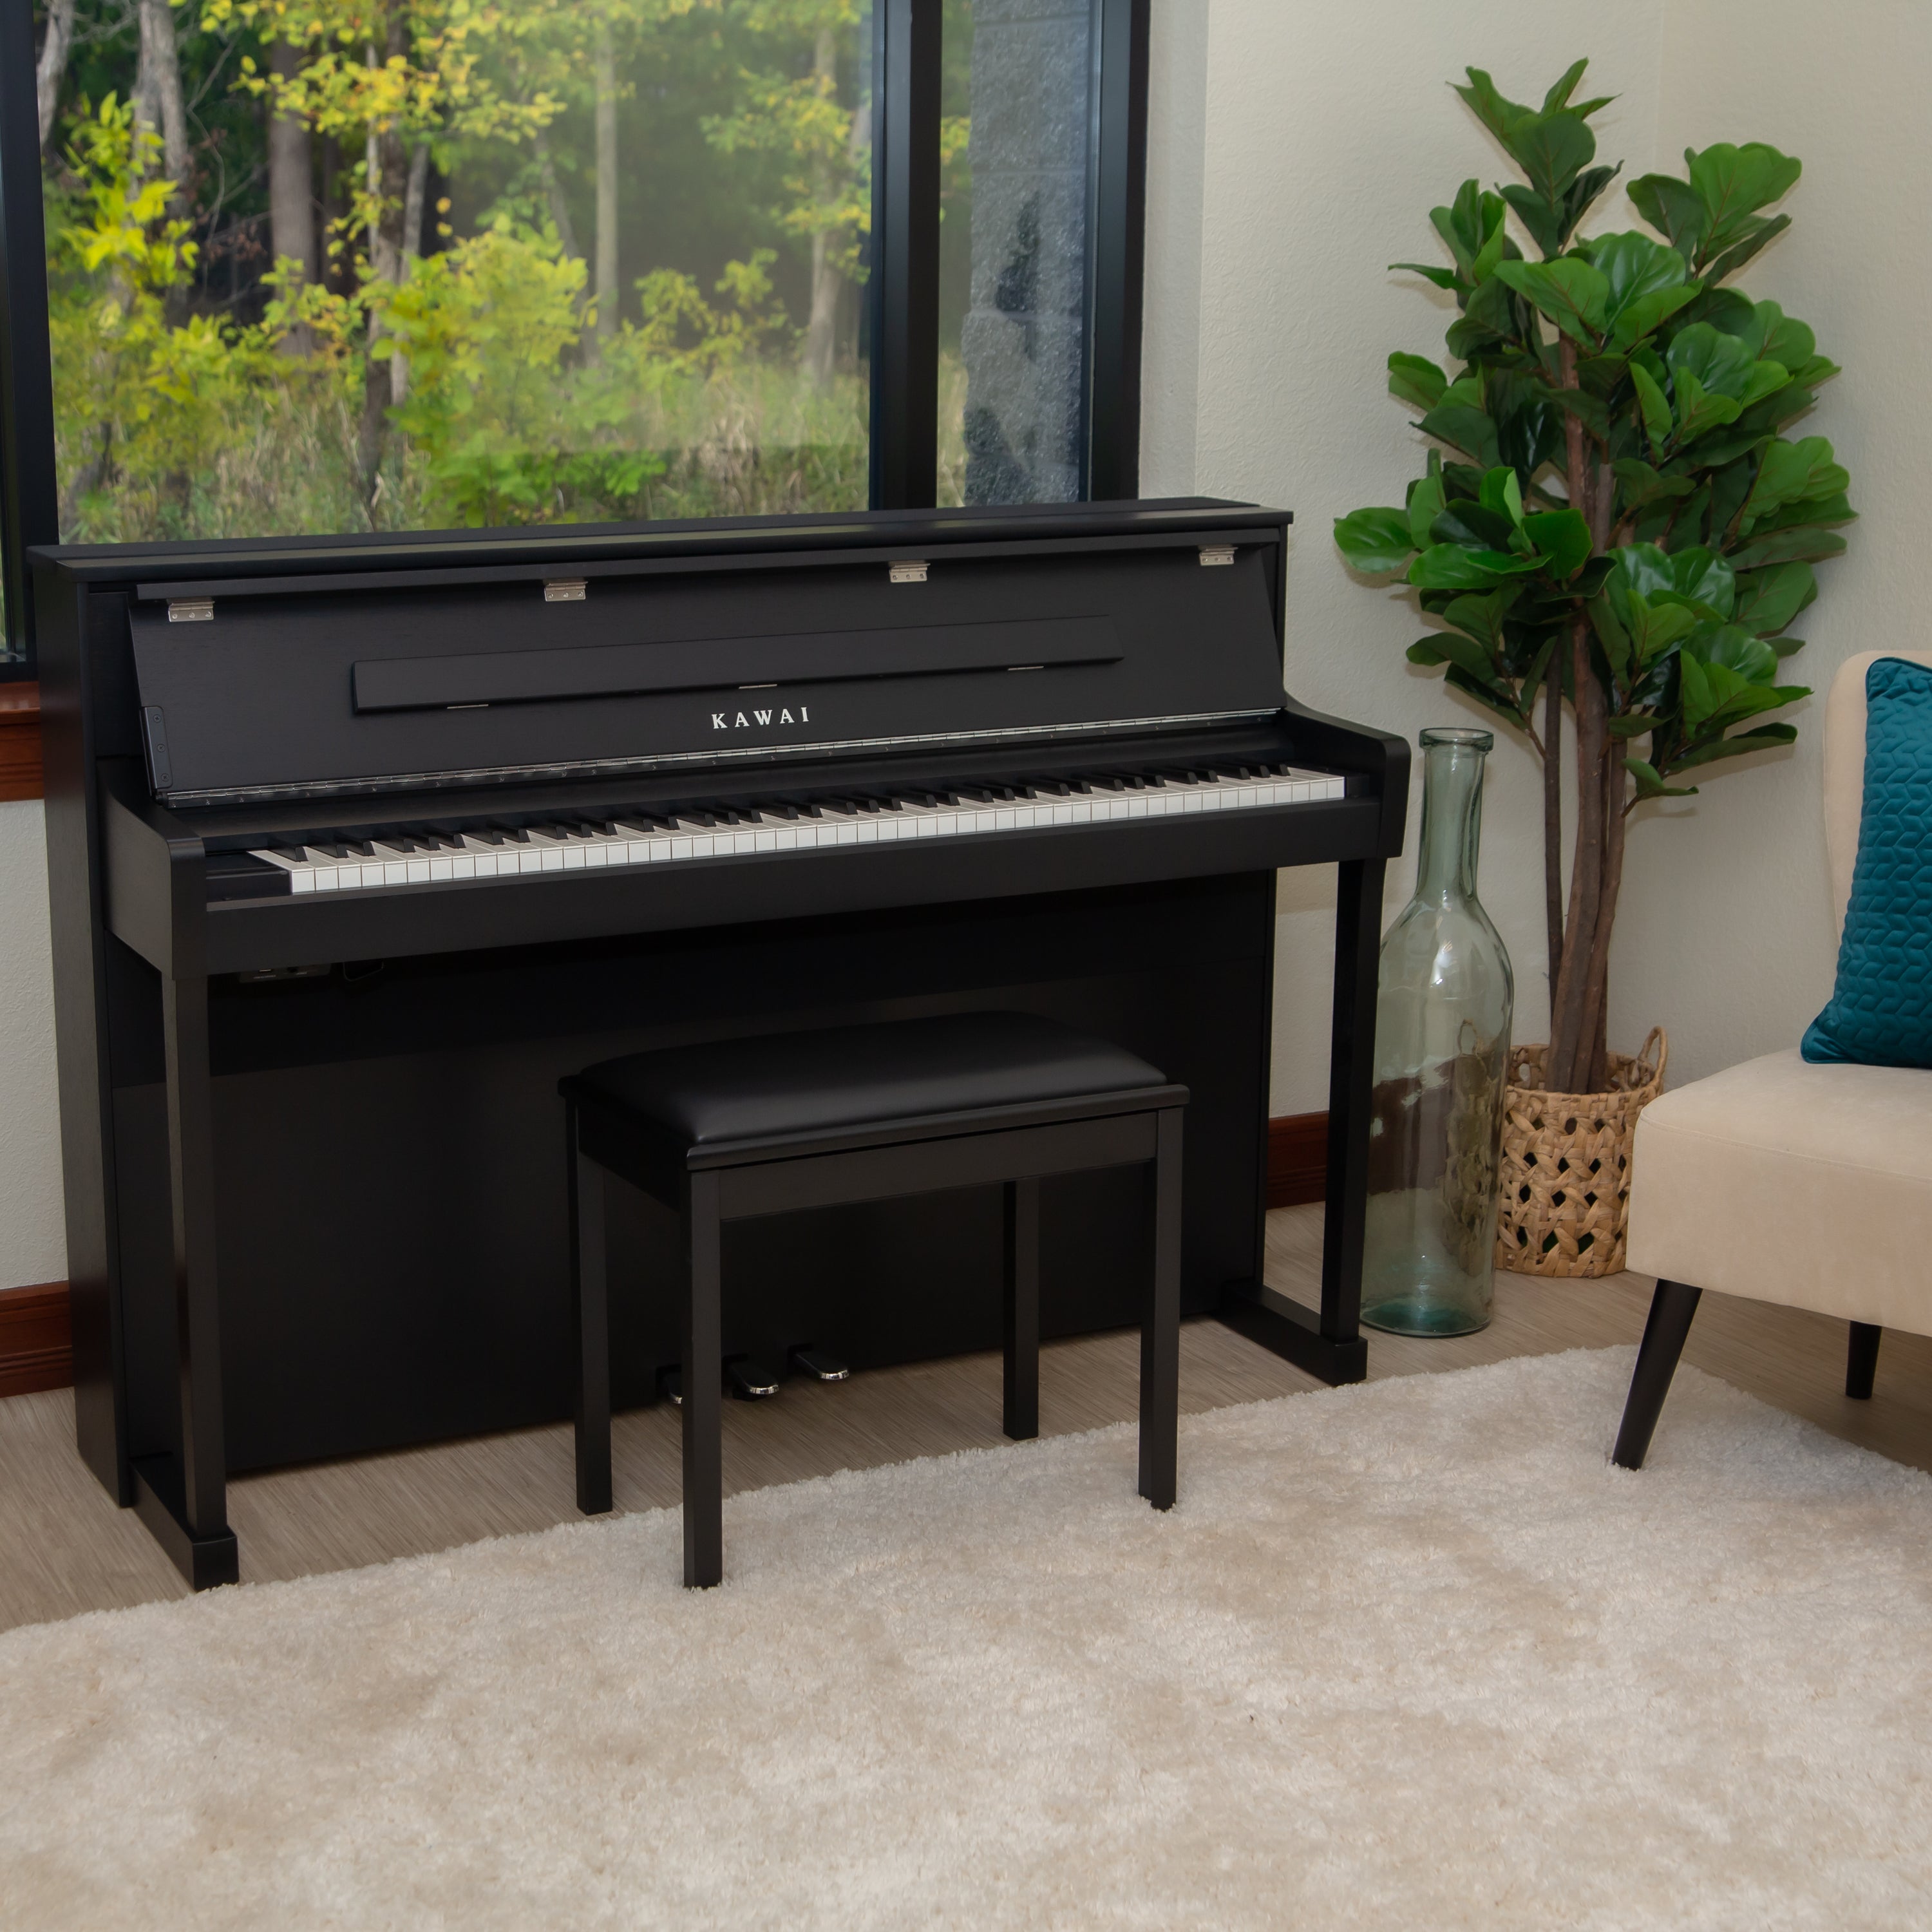 Kawai CA901 Digital Piano - Satin Black - facing right in a stylish living room